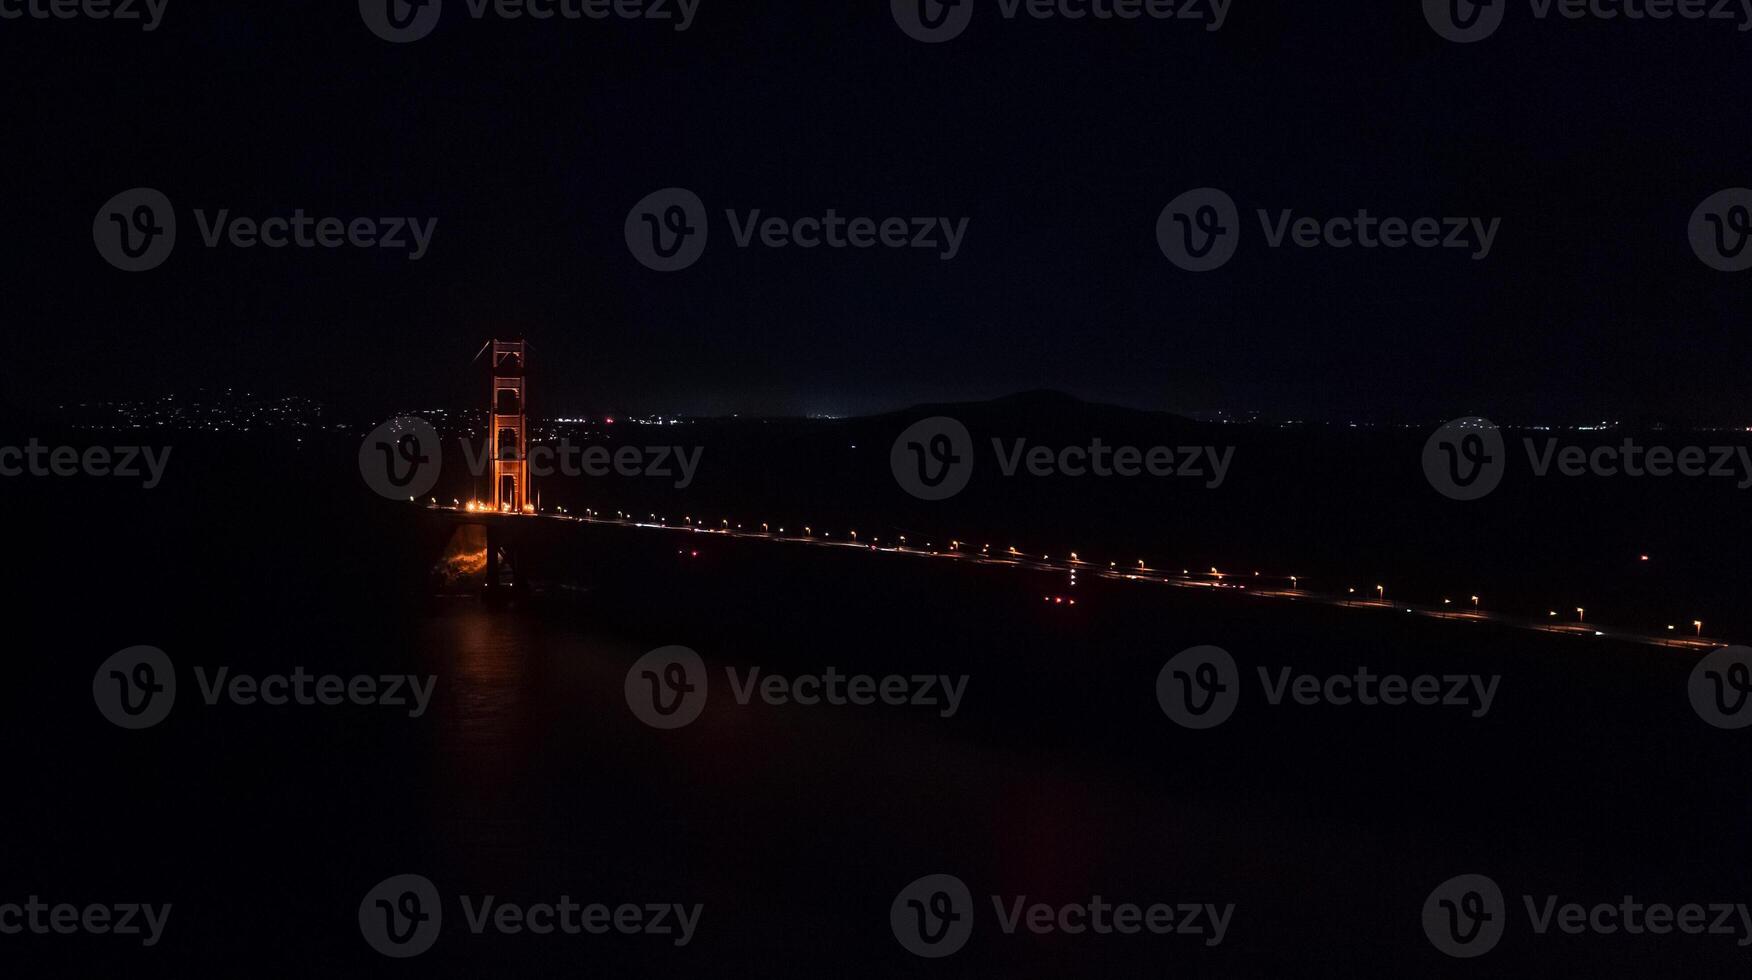 Famous Golden Gate Bridge, San Francisco at night, USA photo